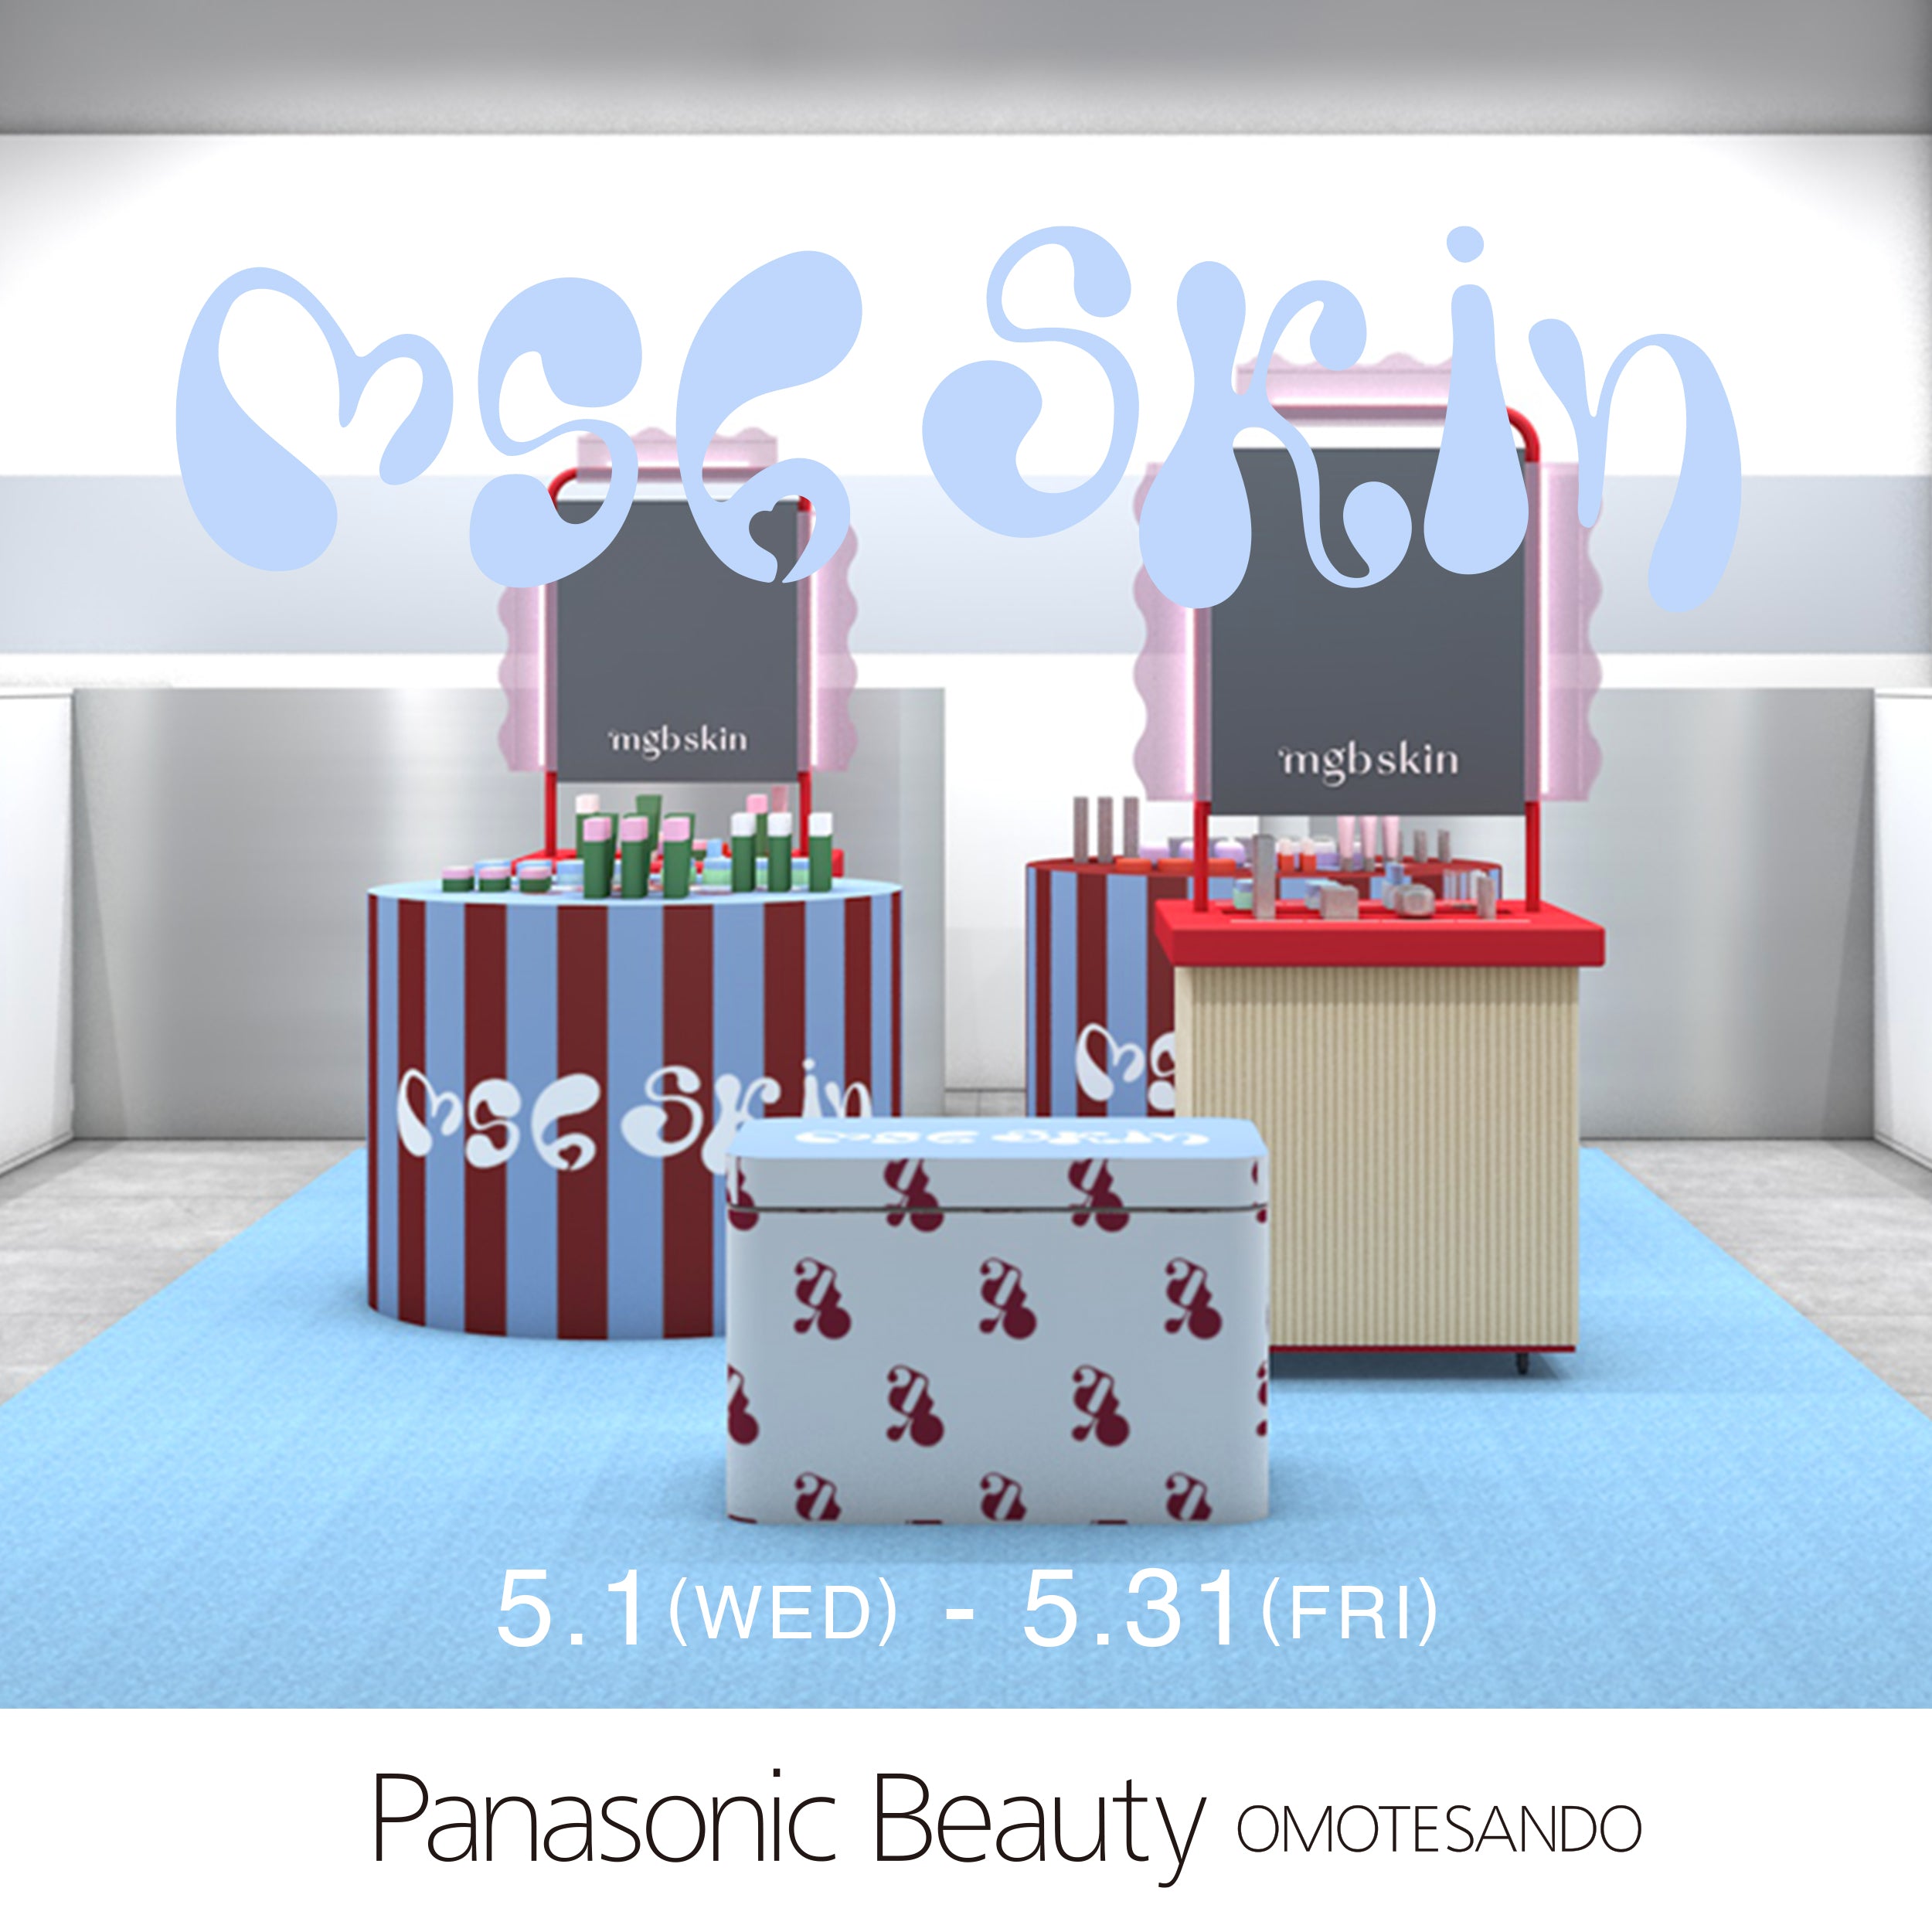 ＼BIG NEWS／ mgb skin x Panasonic Beauty OMOTESANDOのコラボレーションが実現👀💫